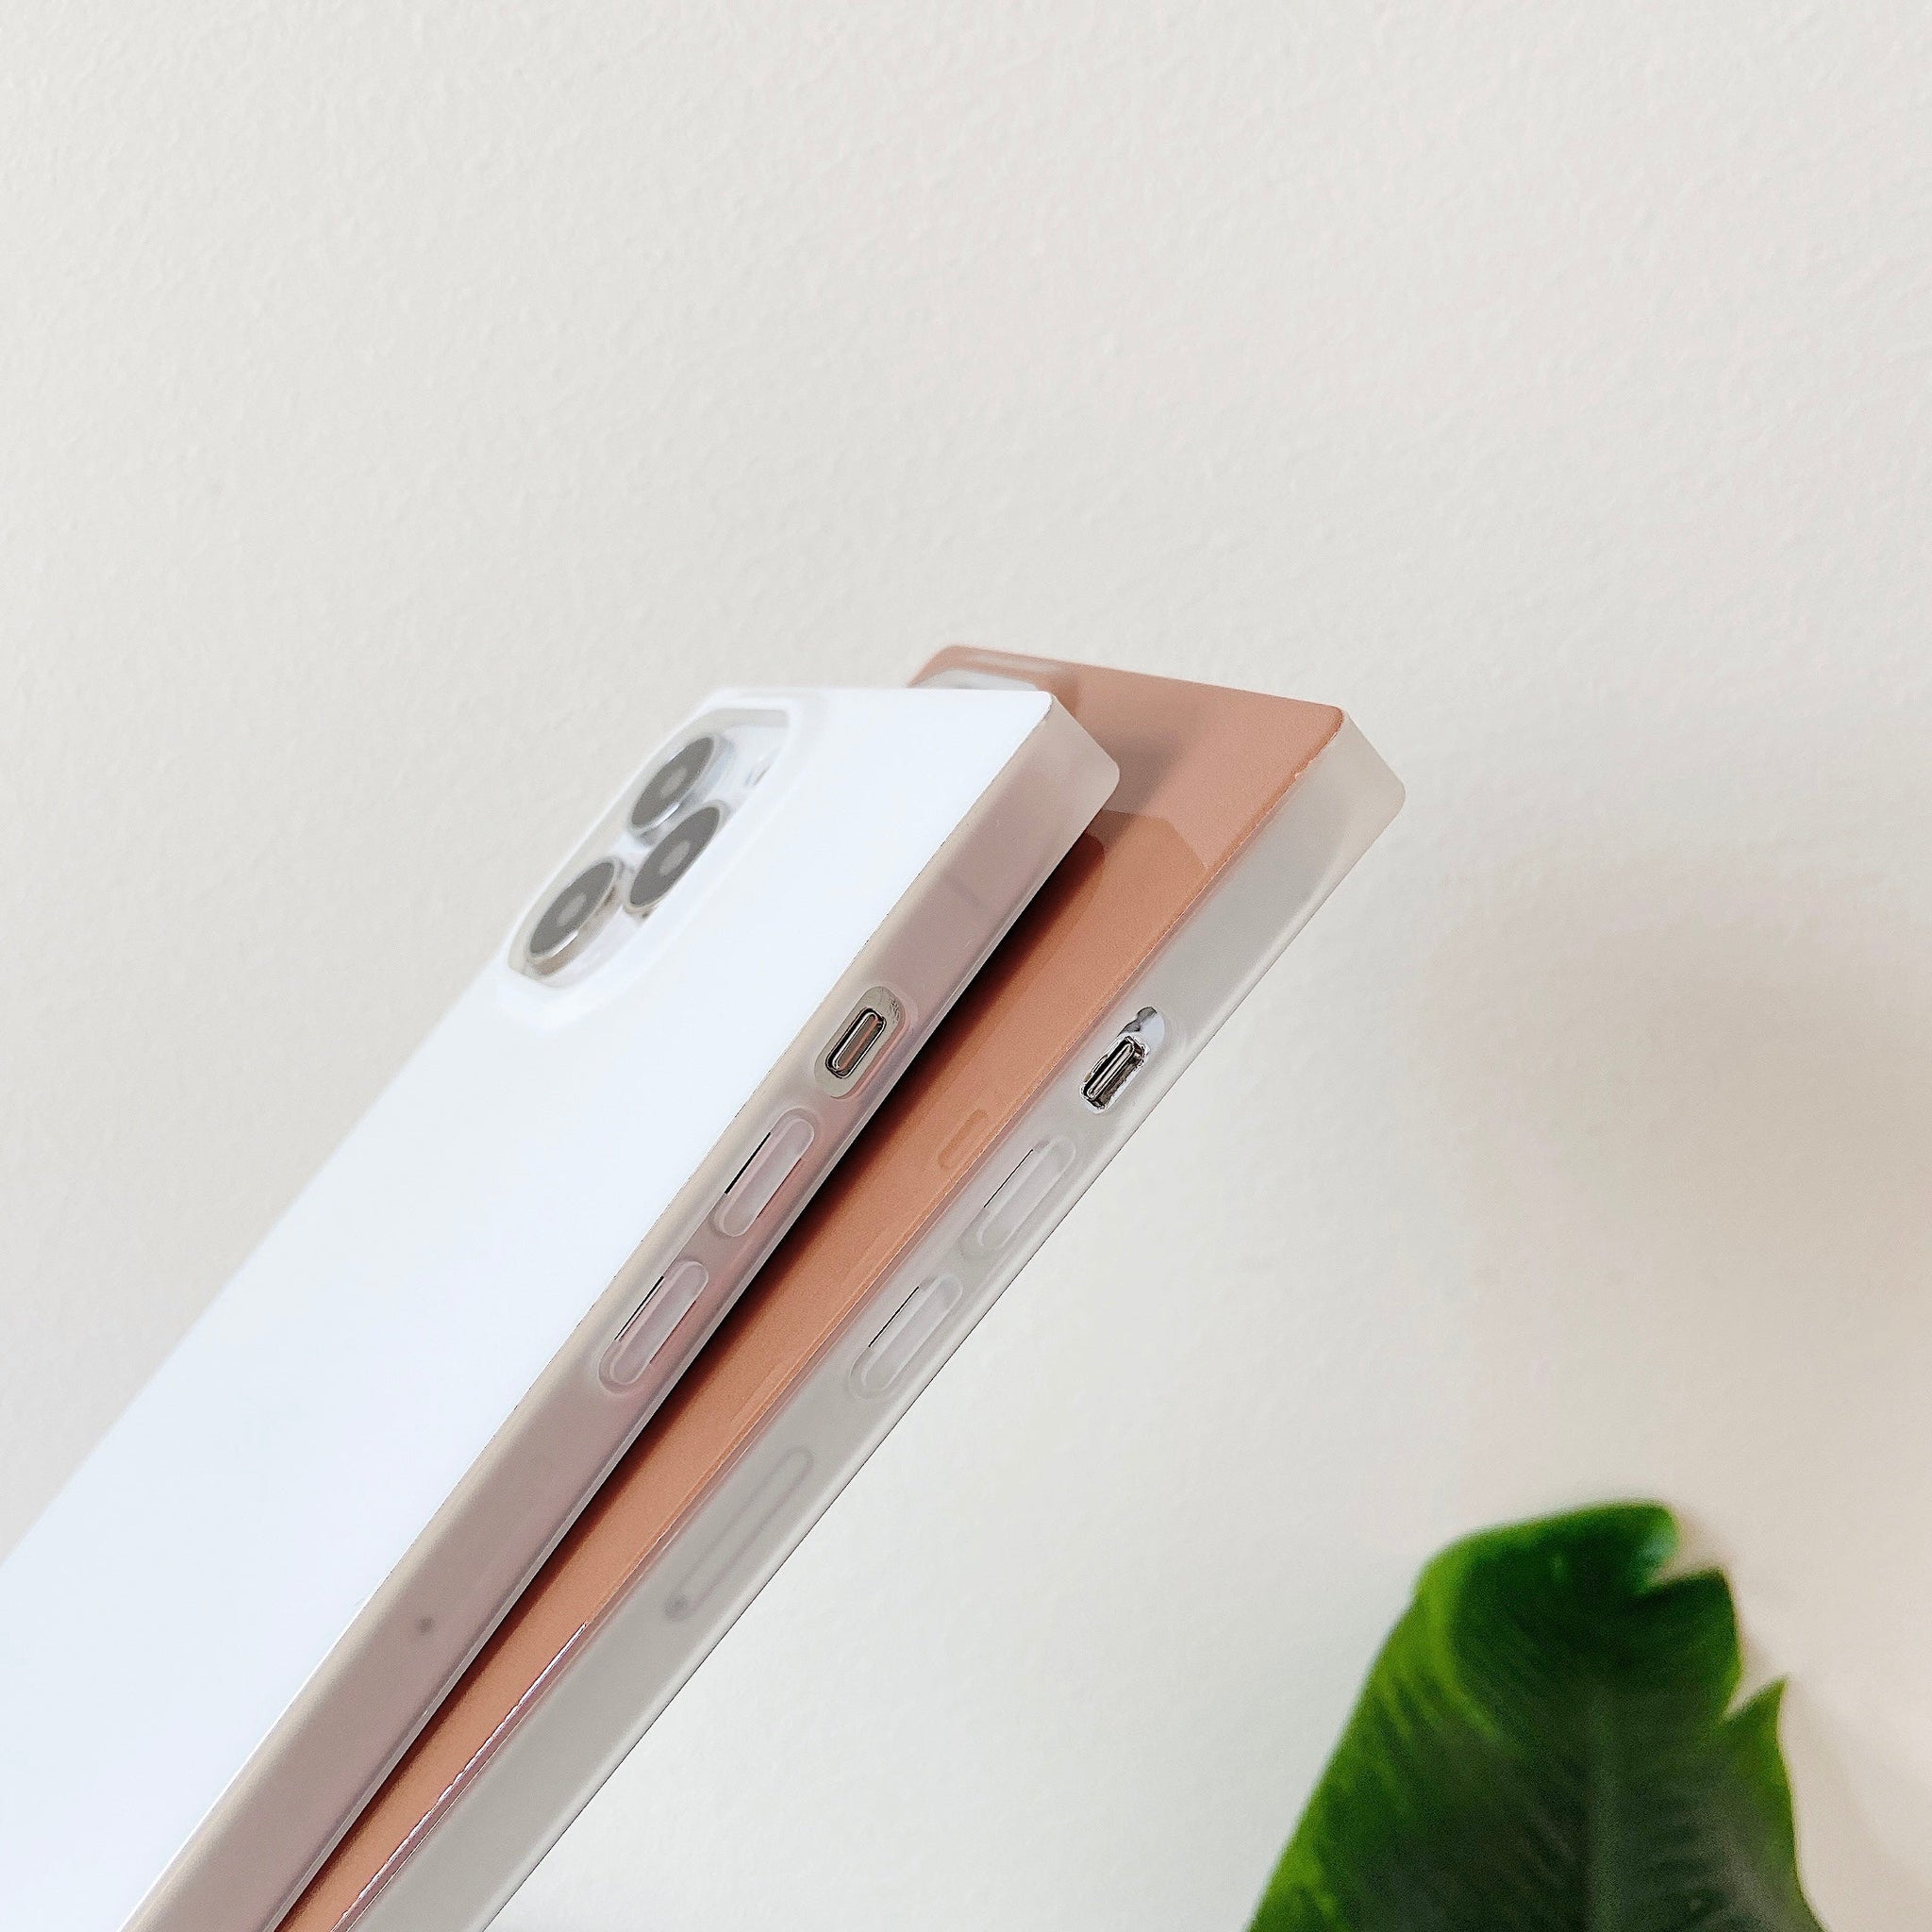 iPhone 11 Pro Max Case Square Neutral Plain Color (Nude)